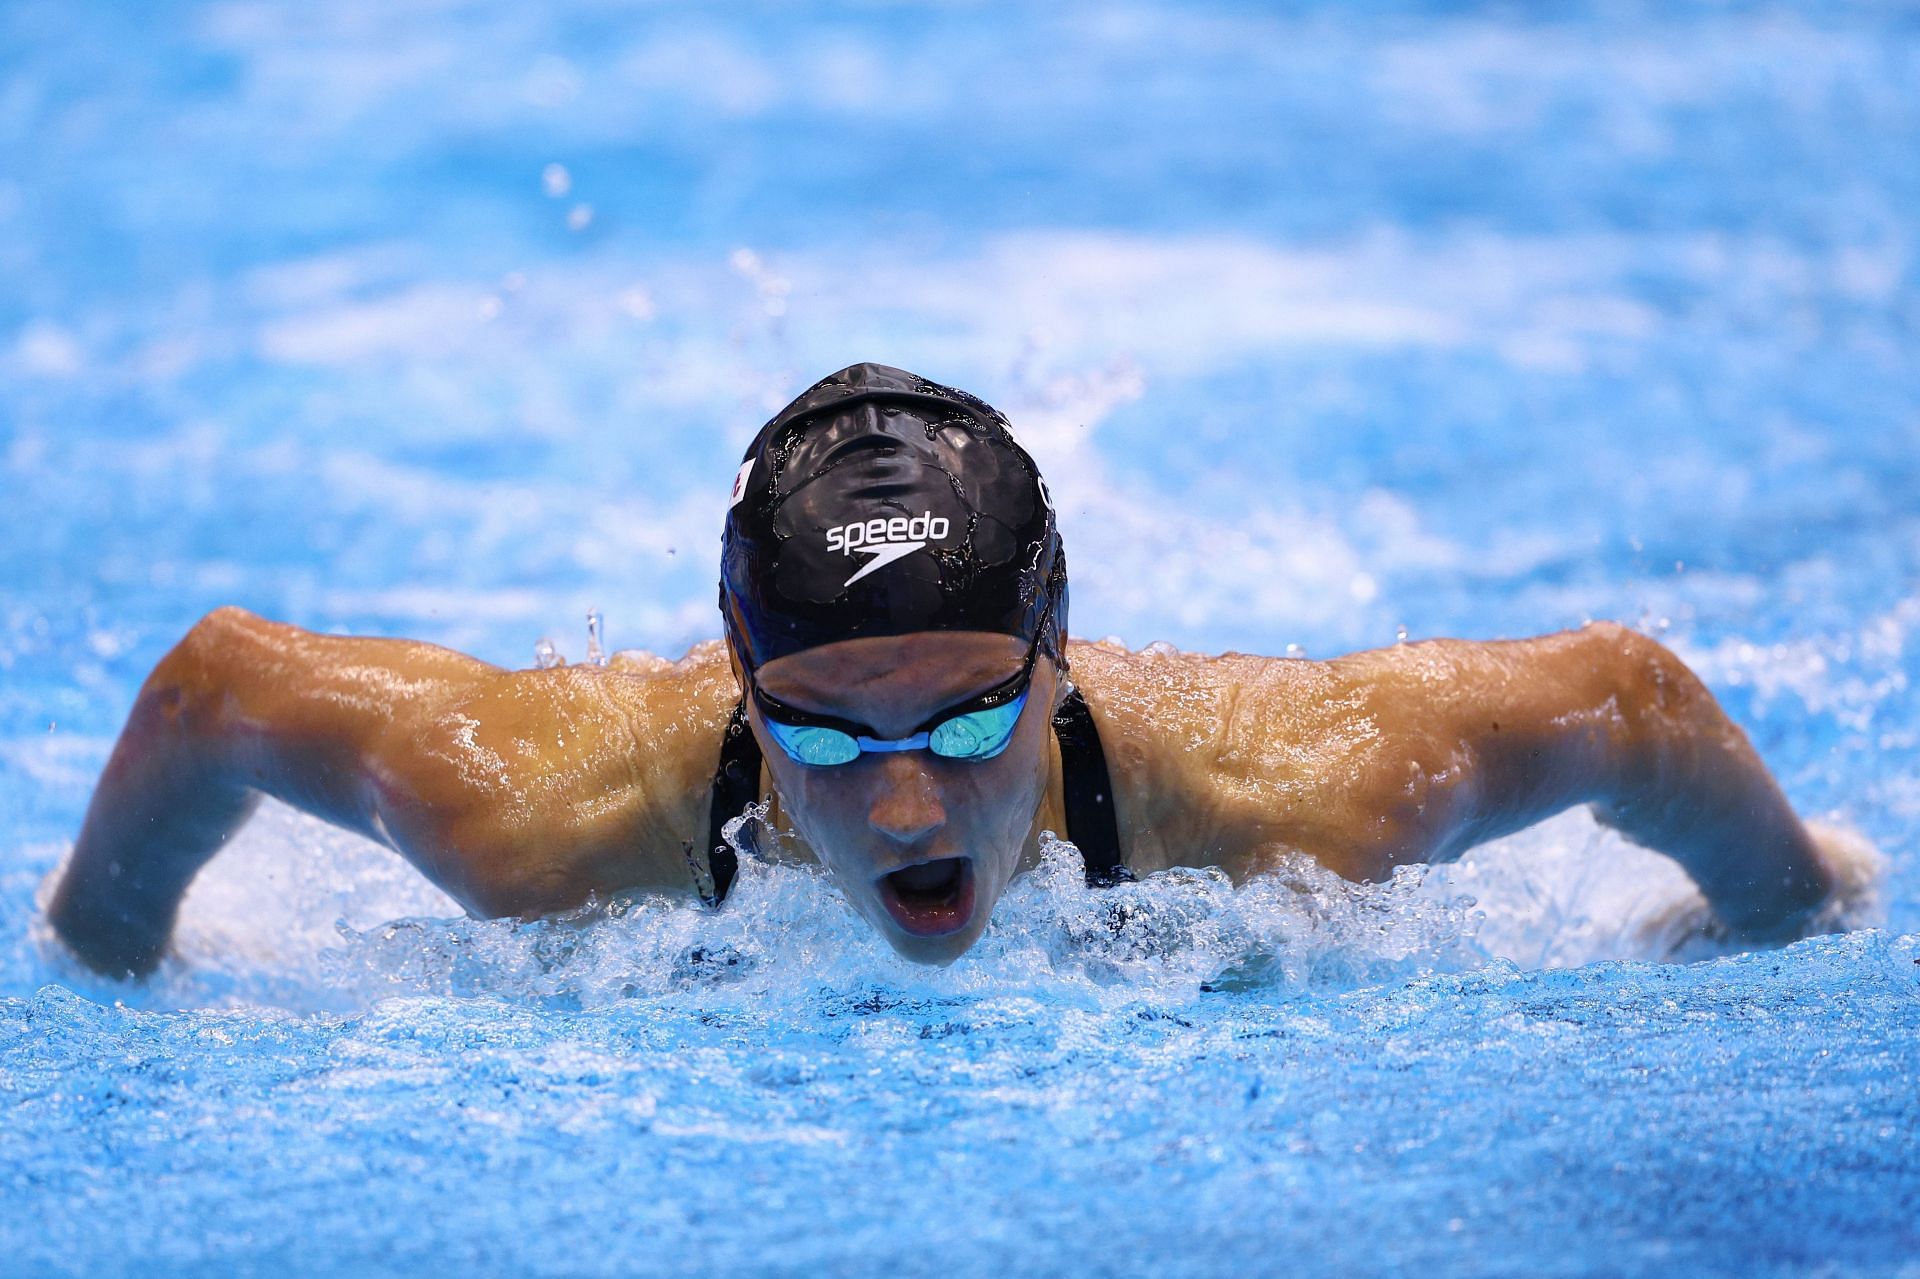 Fukuoka 2023 World Aquatics Championships: Swimming - Day 5